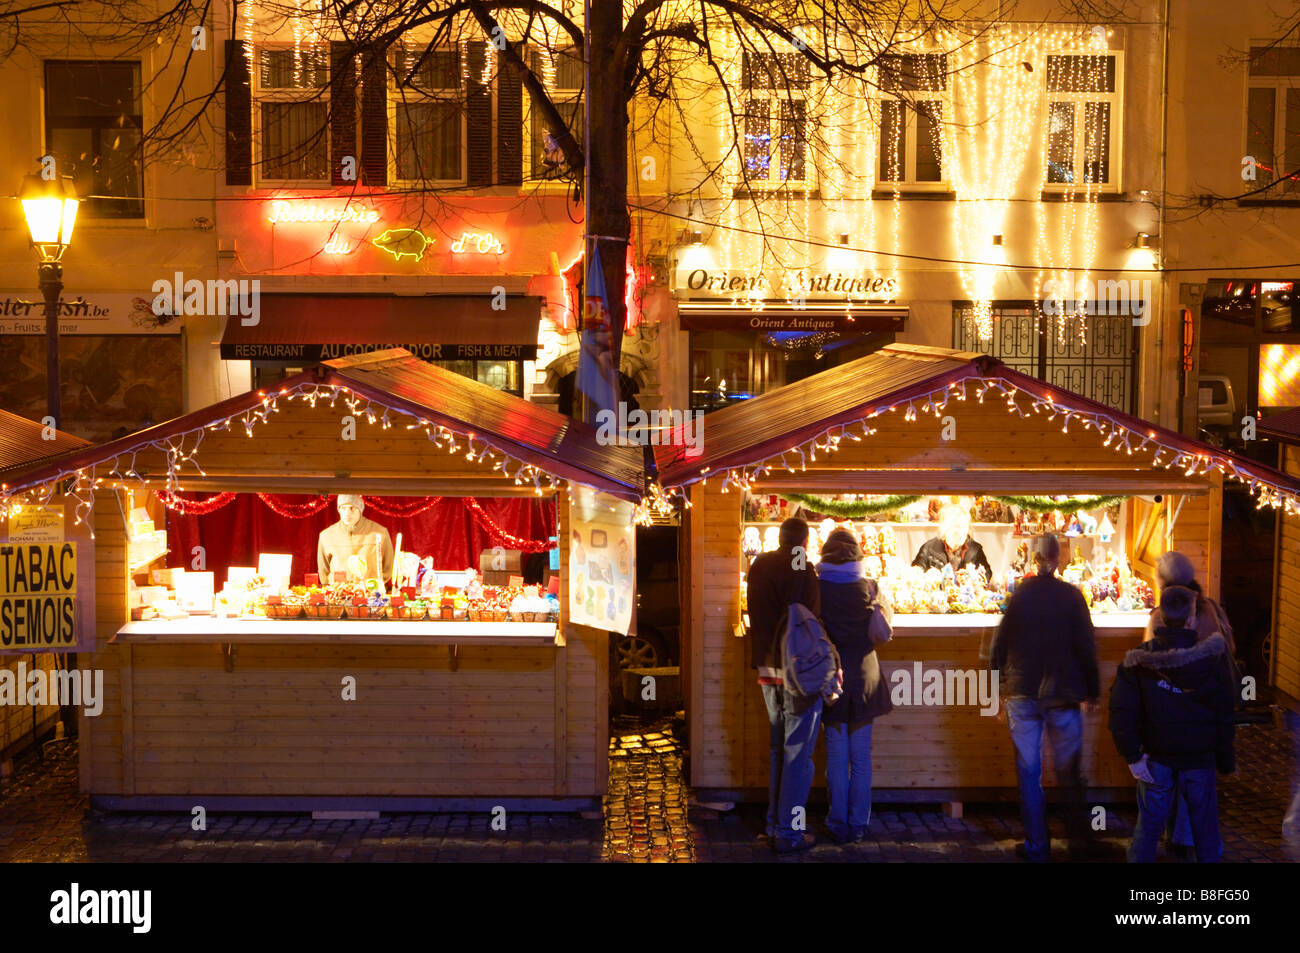 BELGIUM BRUSSELS CHRISTMAS MARKET Stock Photo